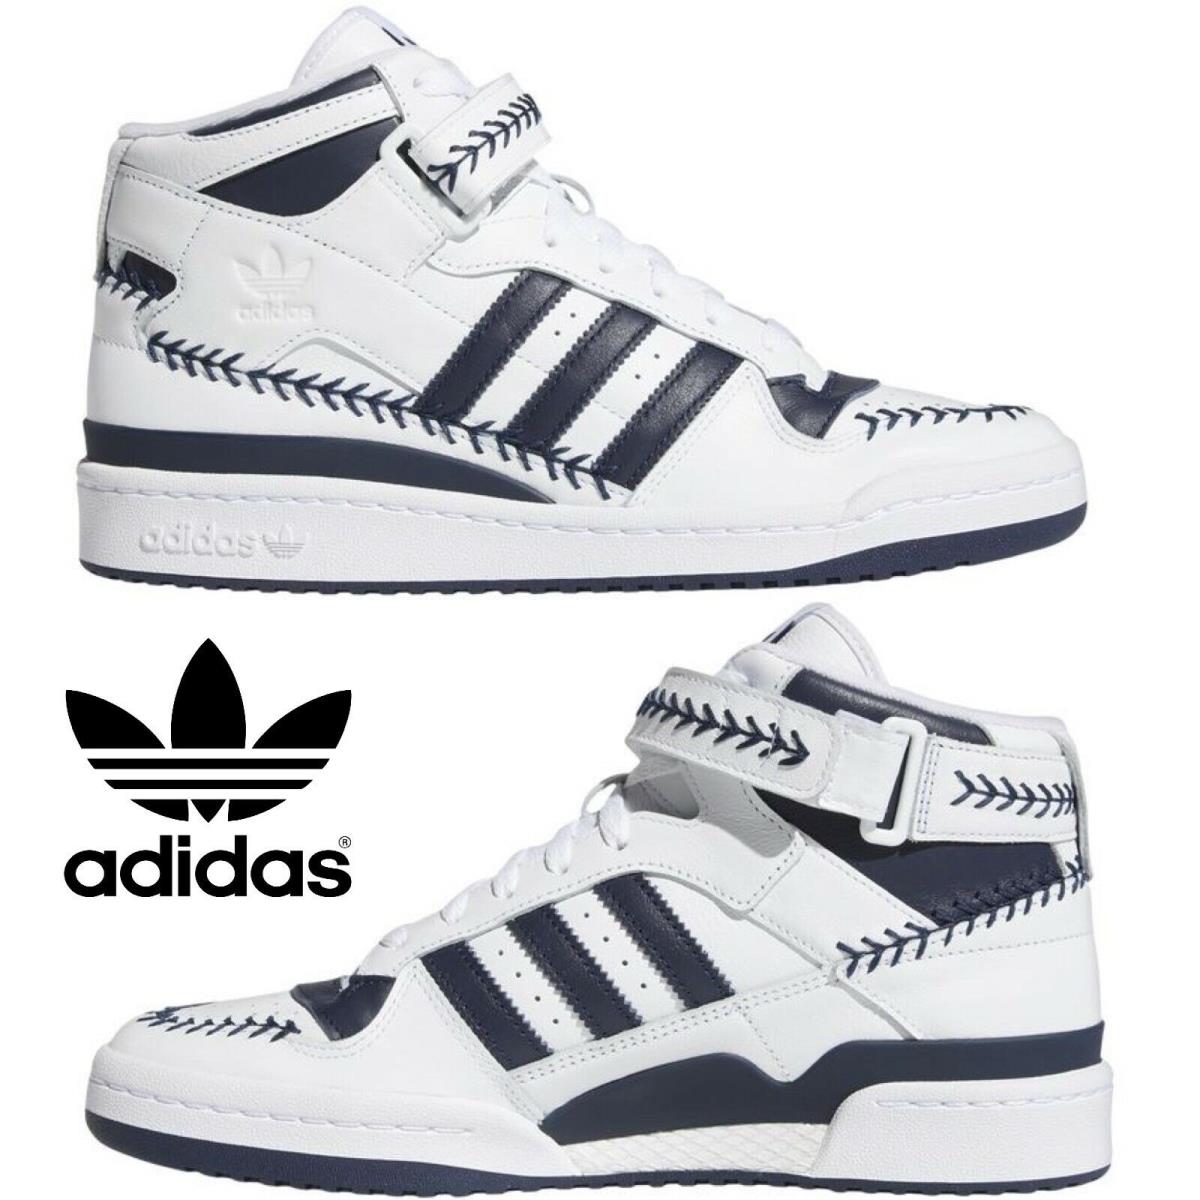 Adidas Originals Forum Mid Men`s Sneakers Comfort Casual Shoes White Navy